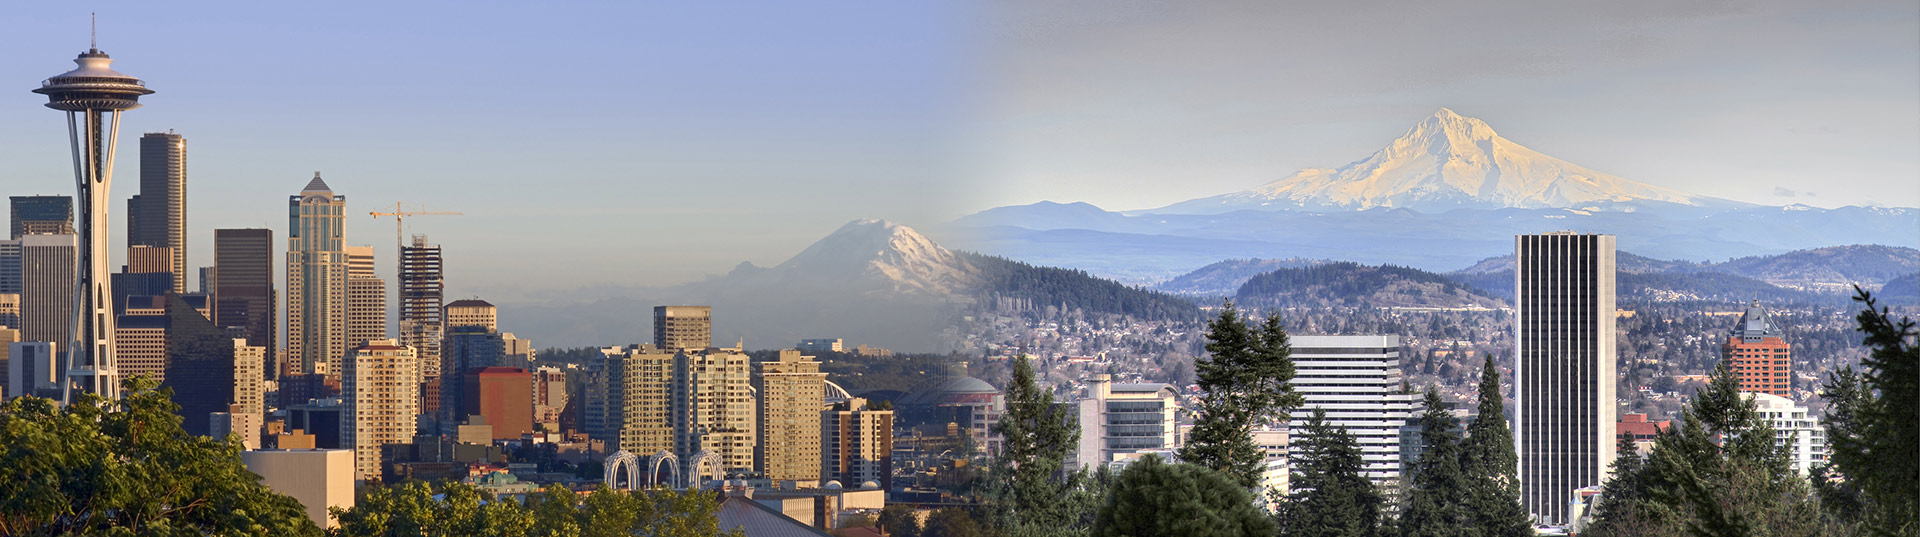 Portland Seattle Image